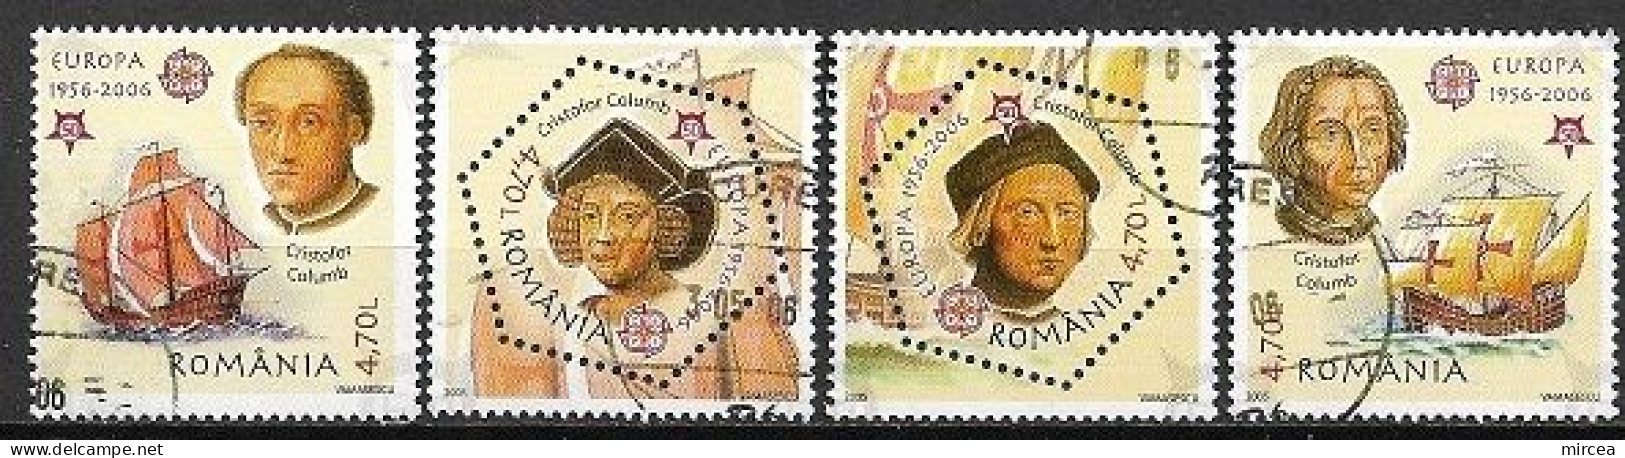 C3977 - Roumanie 2005 - 4v.obliteres - Used Stamps